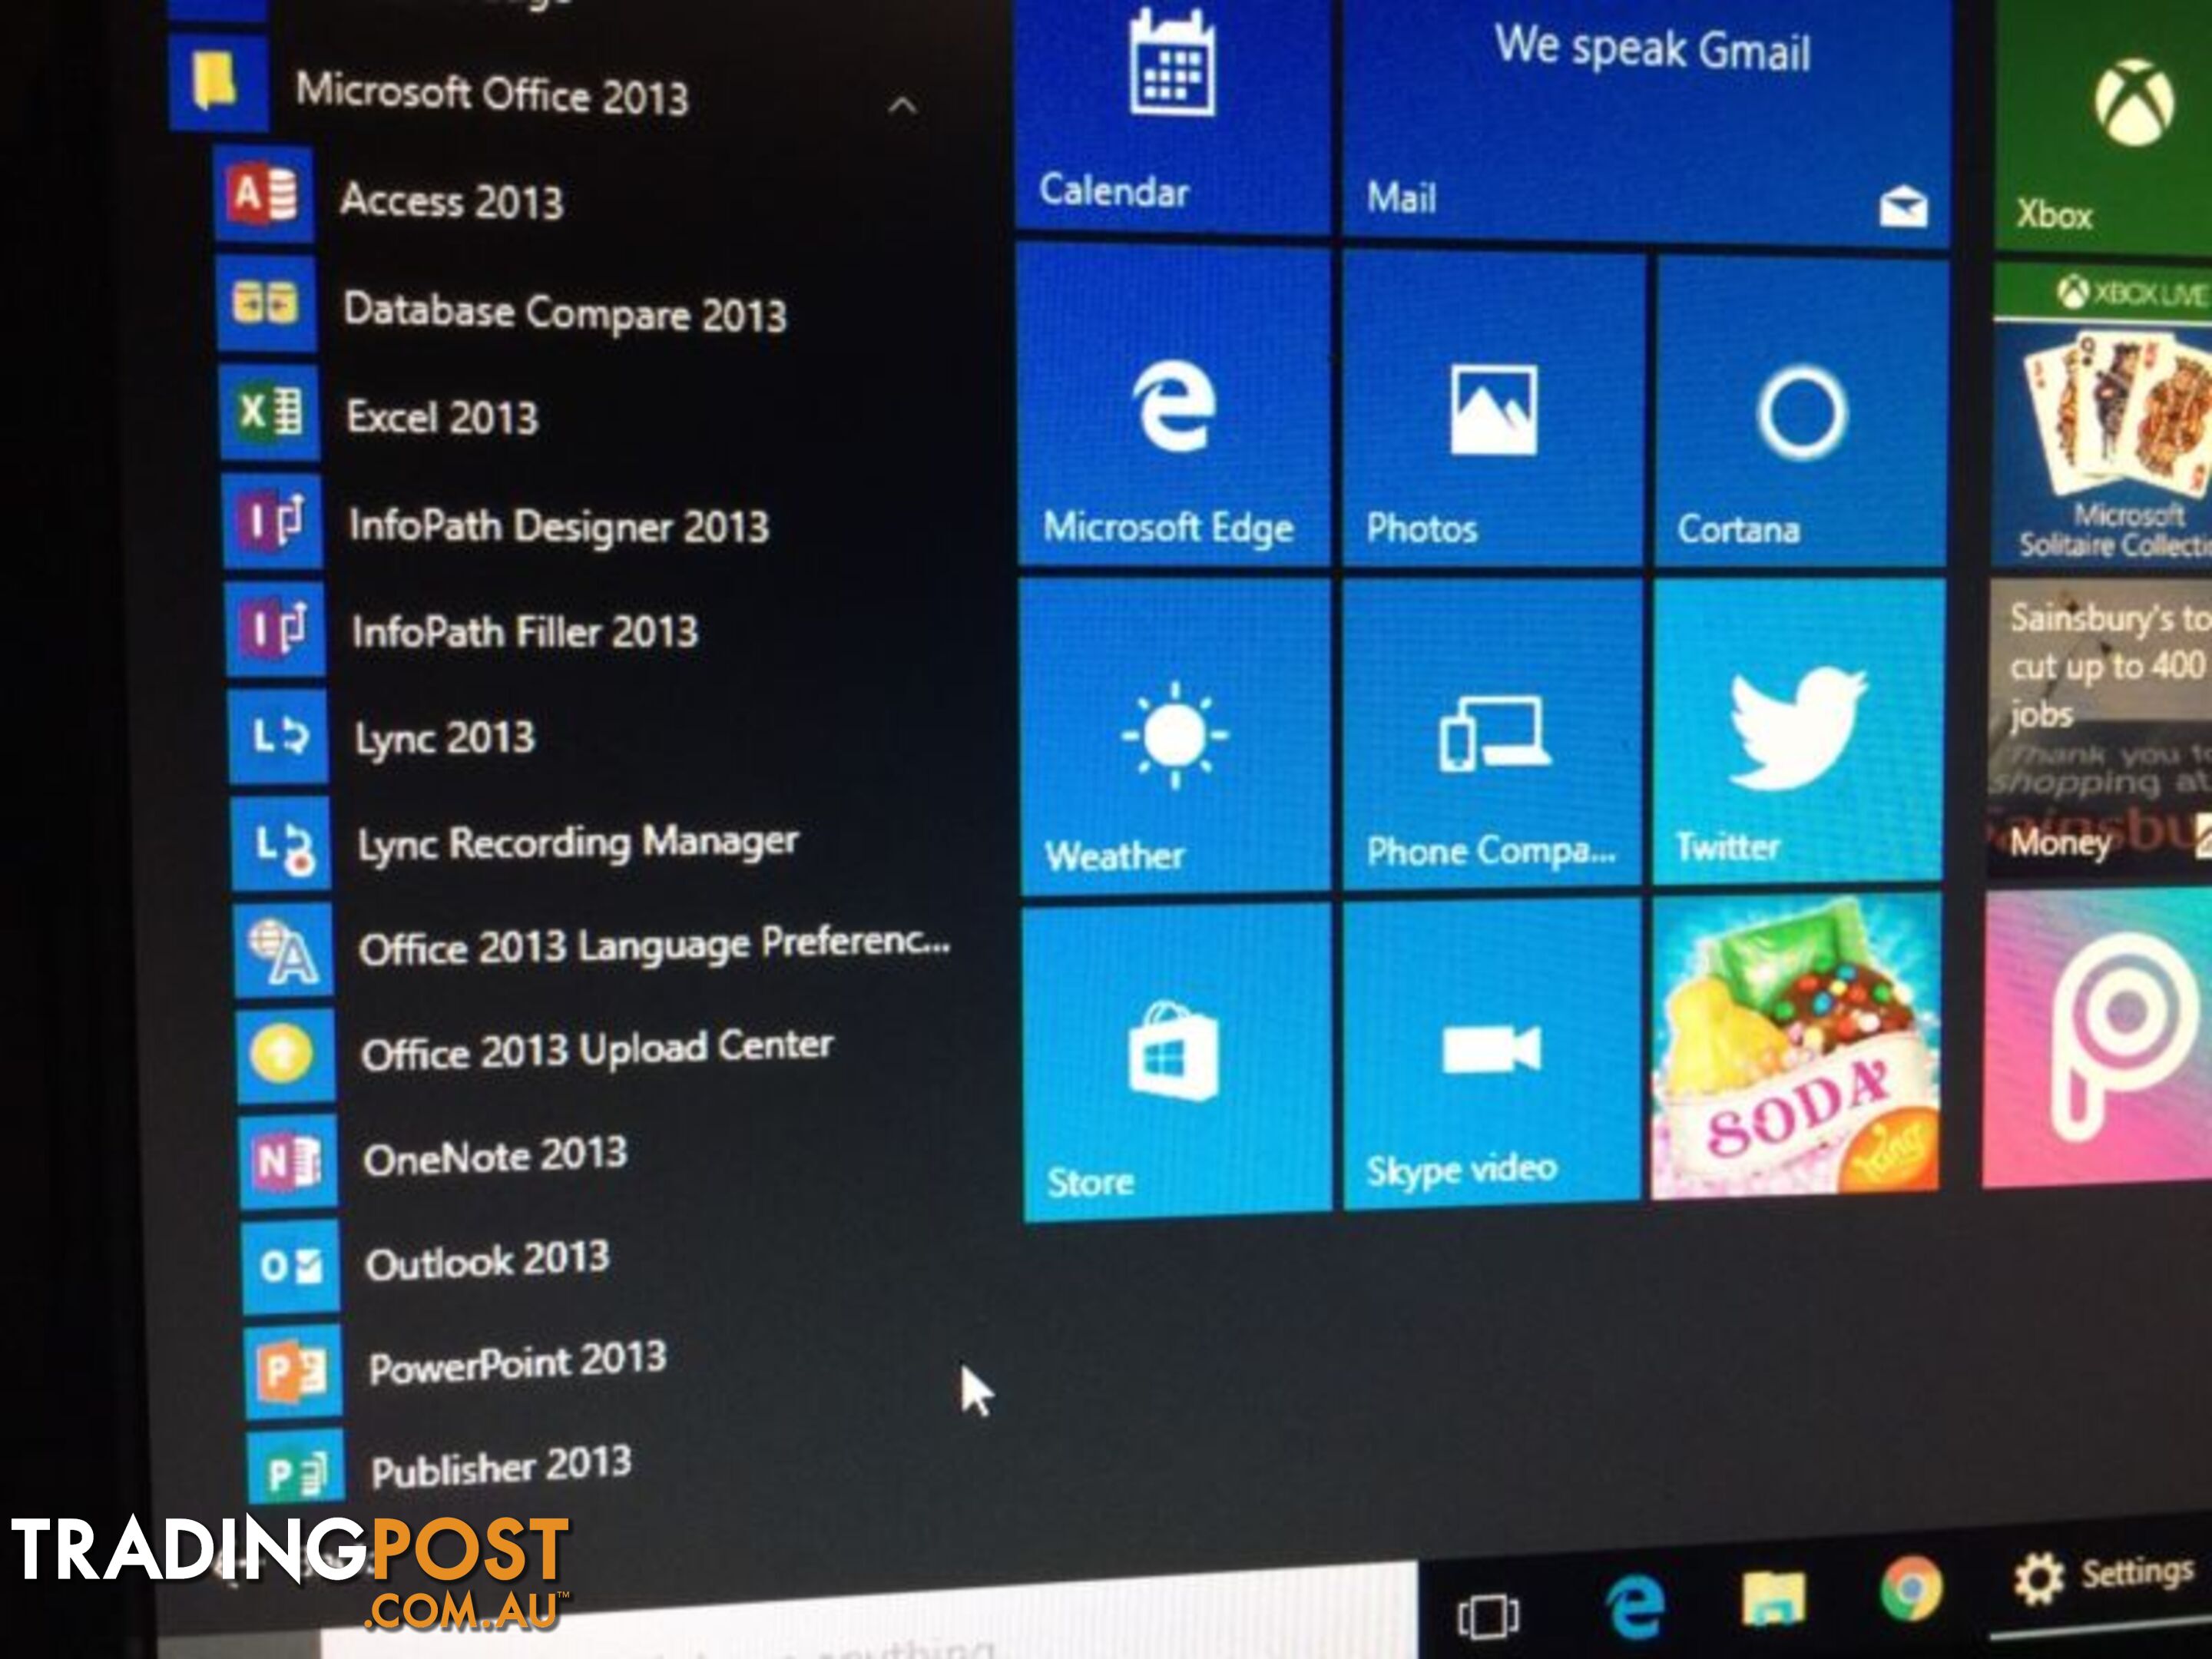 Windows 10 / office 2013 / 8GB Ram / Quad core / cleab